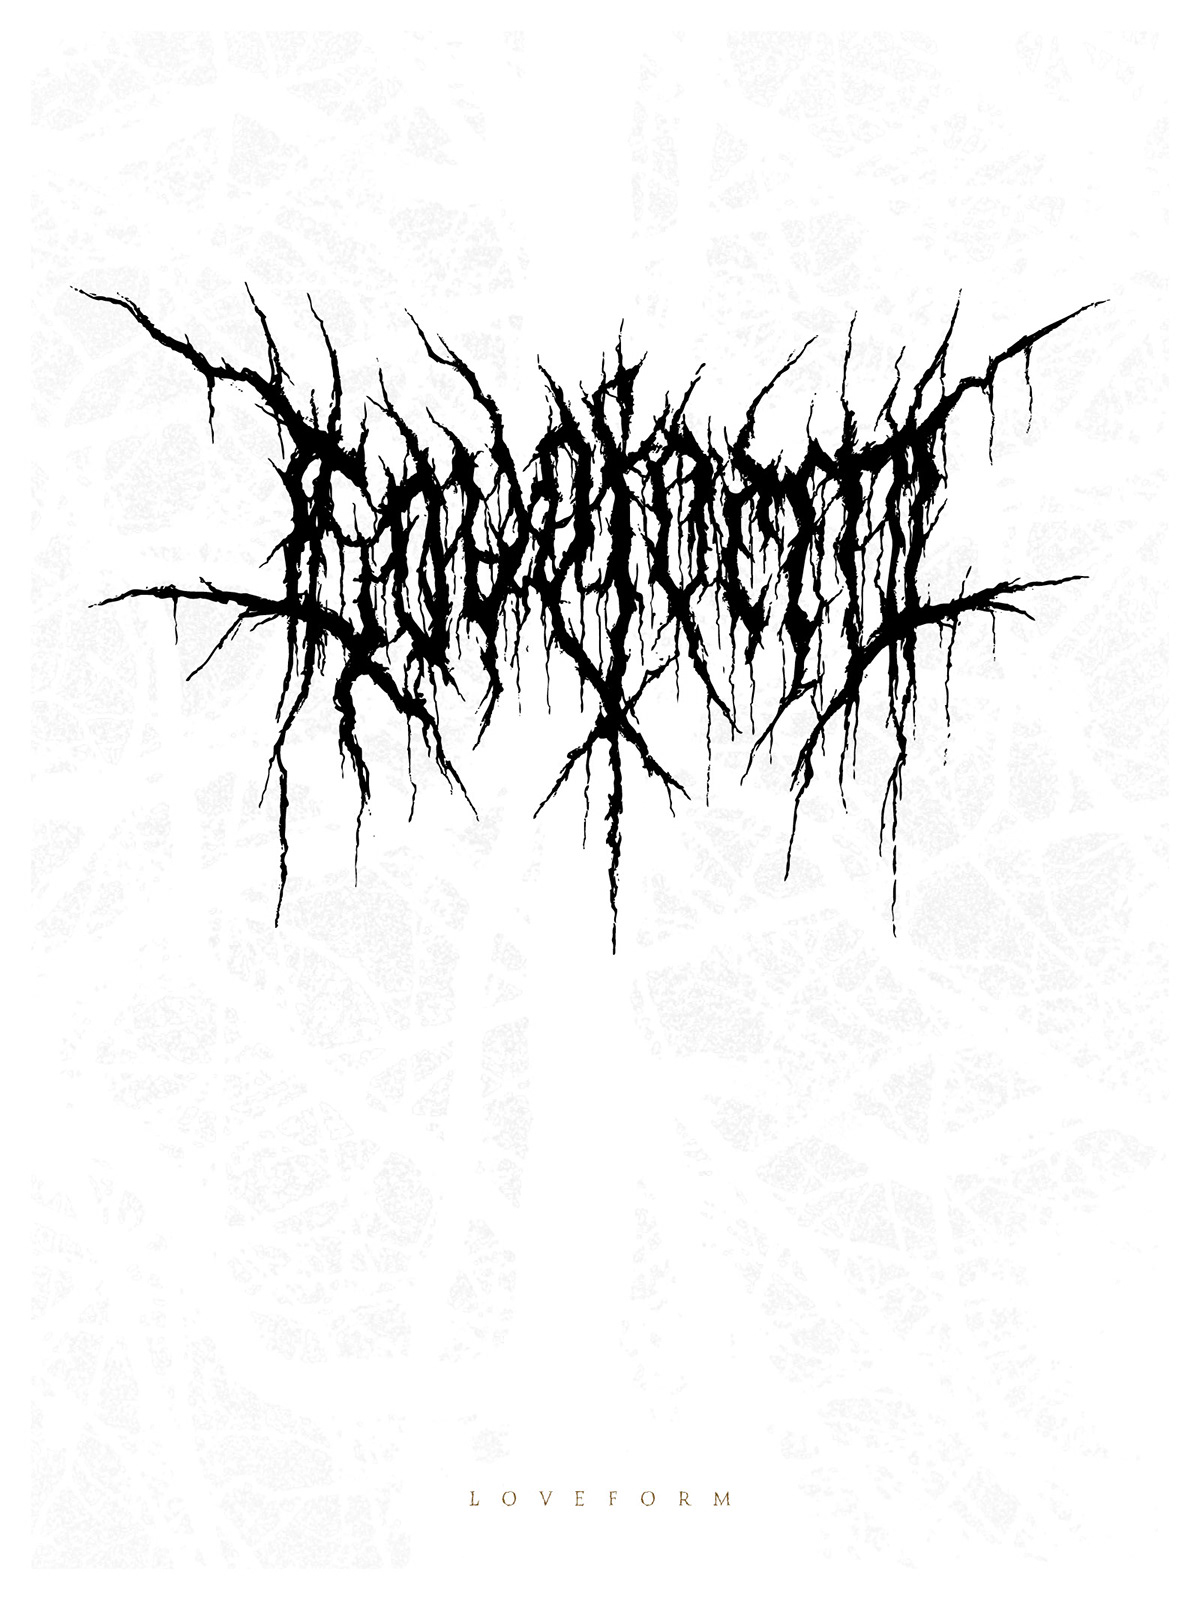 Blackmetal Deathmetal doom metal decay death ugliness